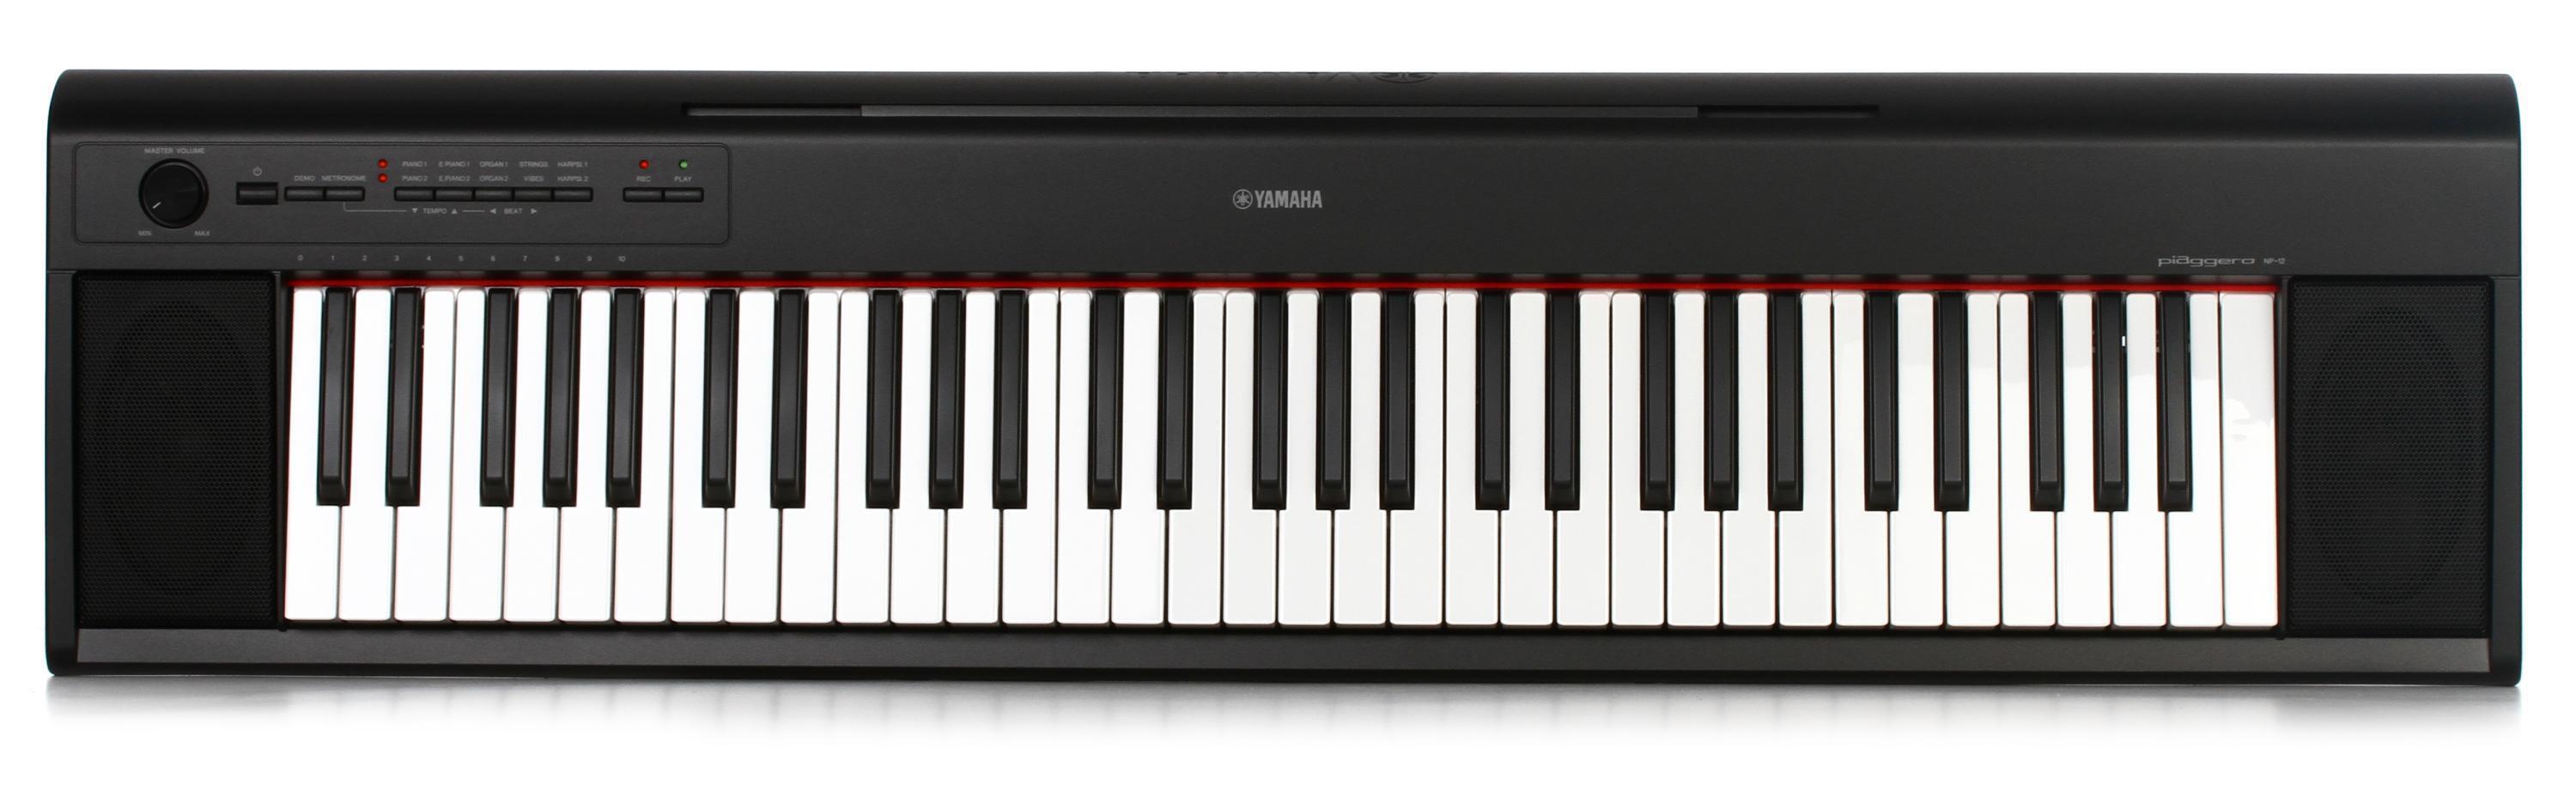 Yamaha Piaggero NP-12 61-key Portable Piano - Black